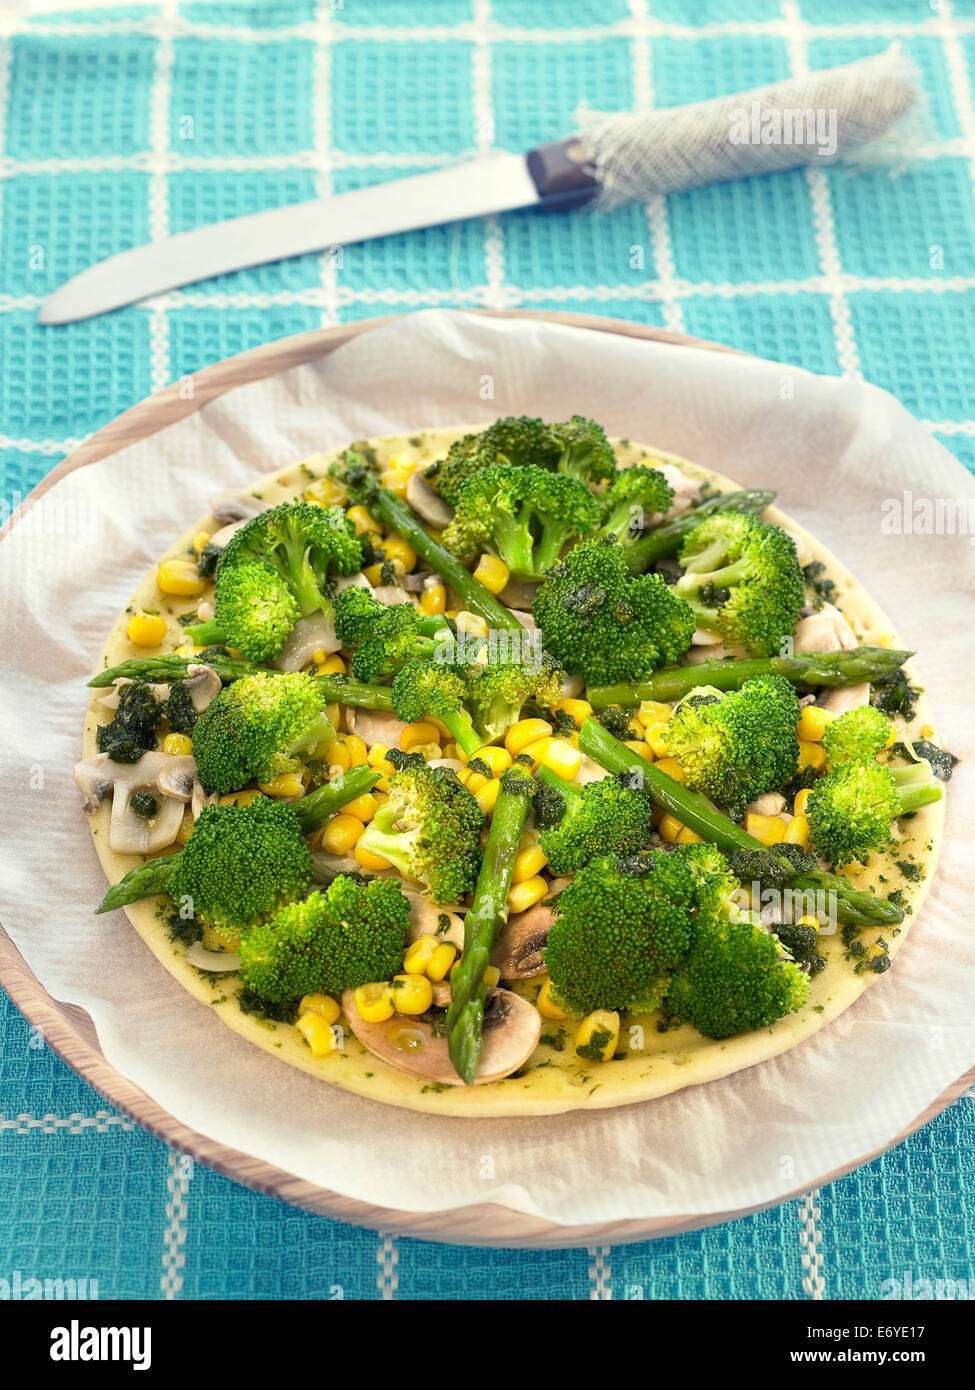 Broccoli-sweetcorn pizza Stock Photo